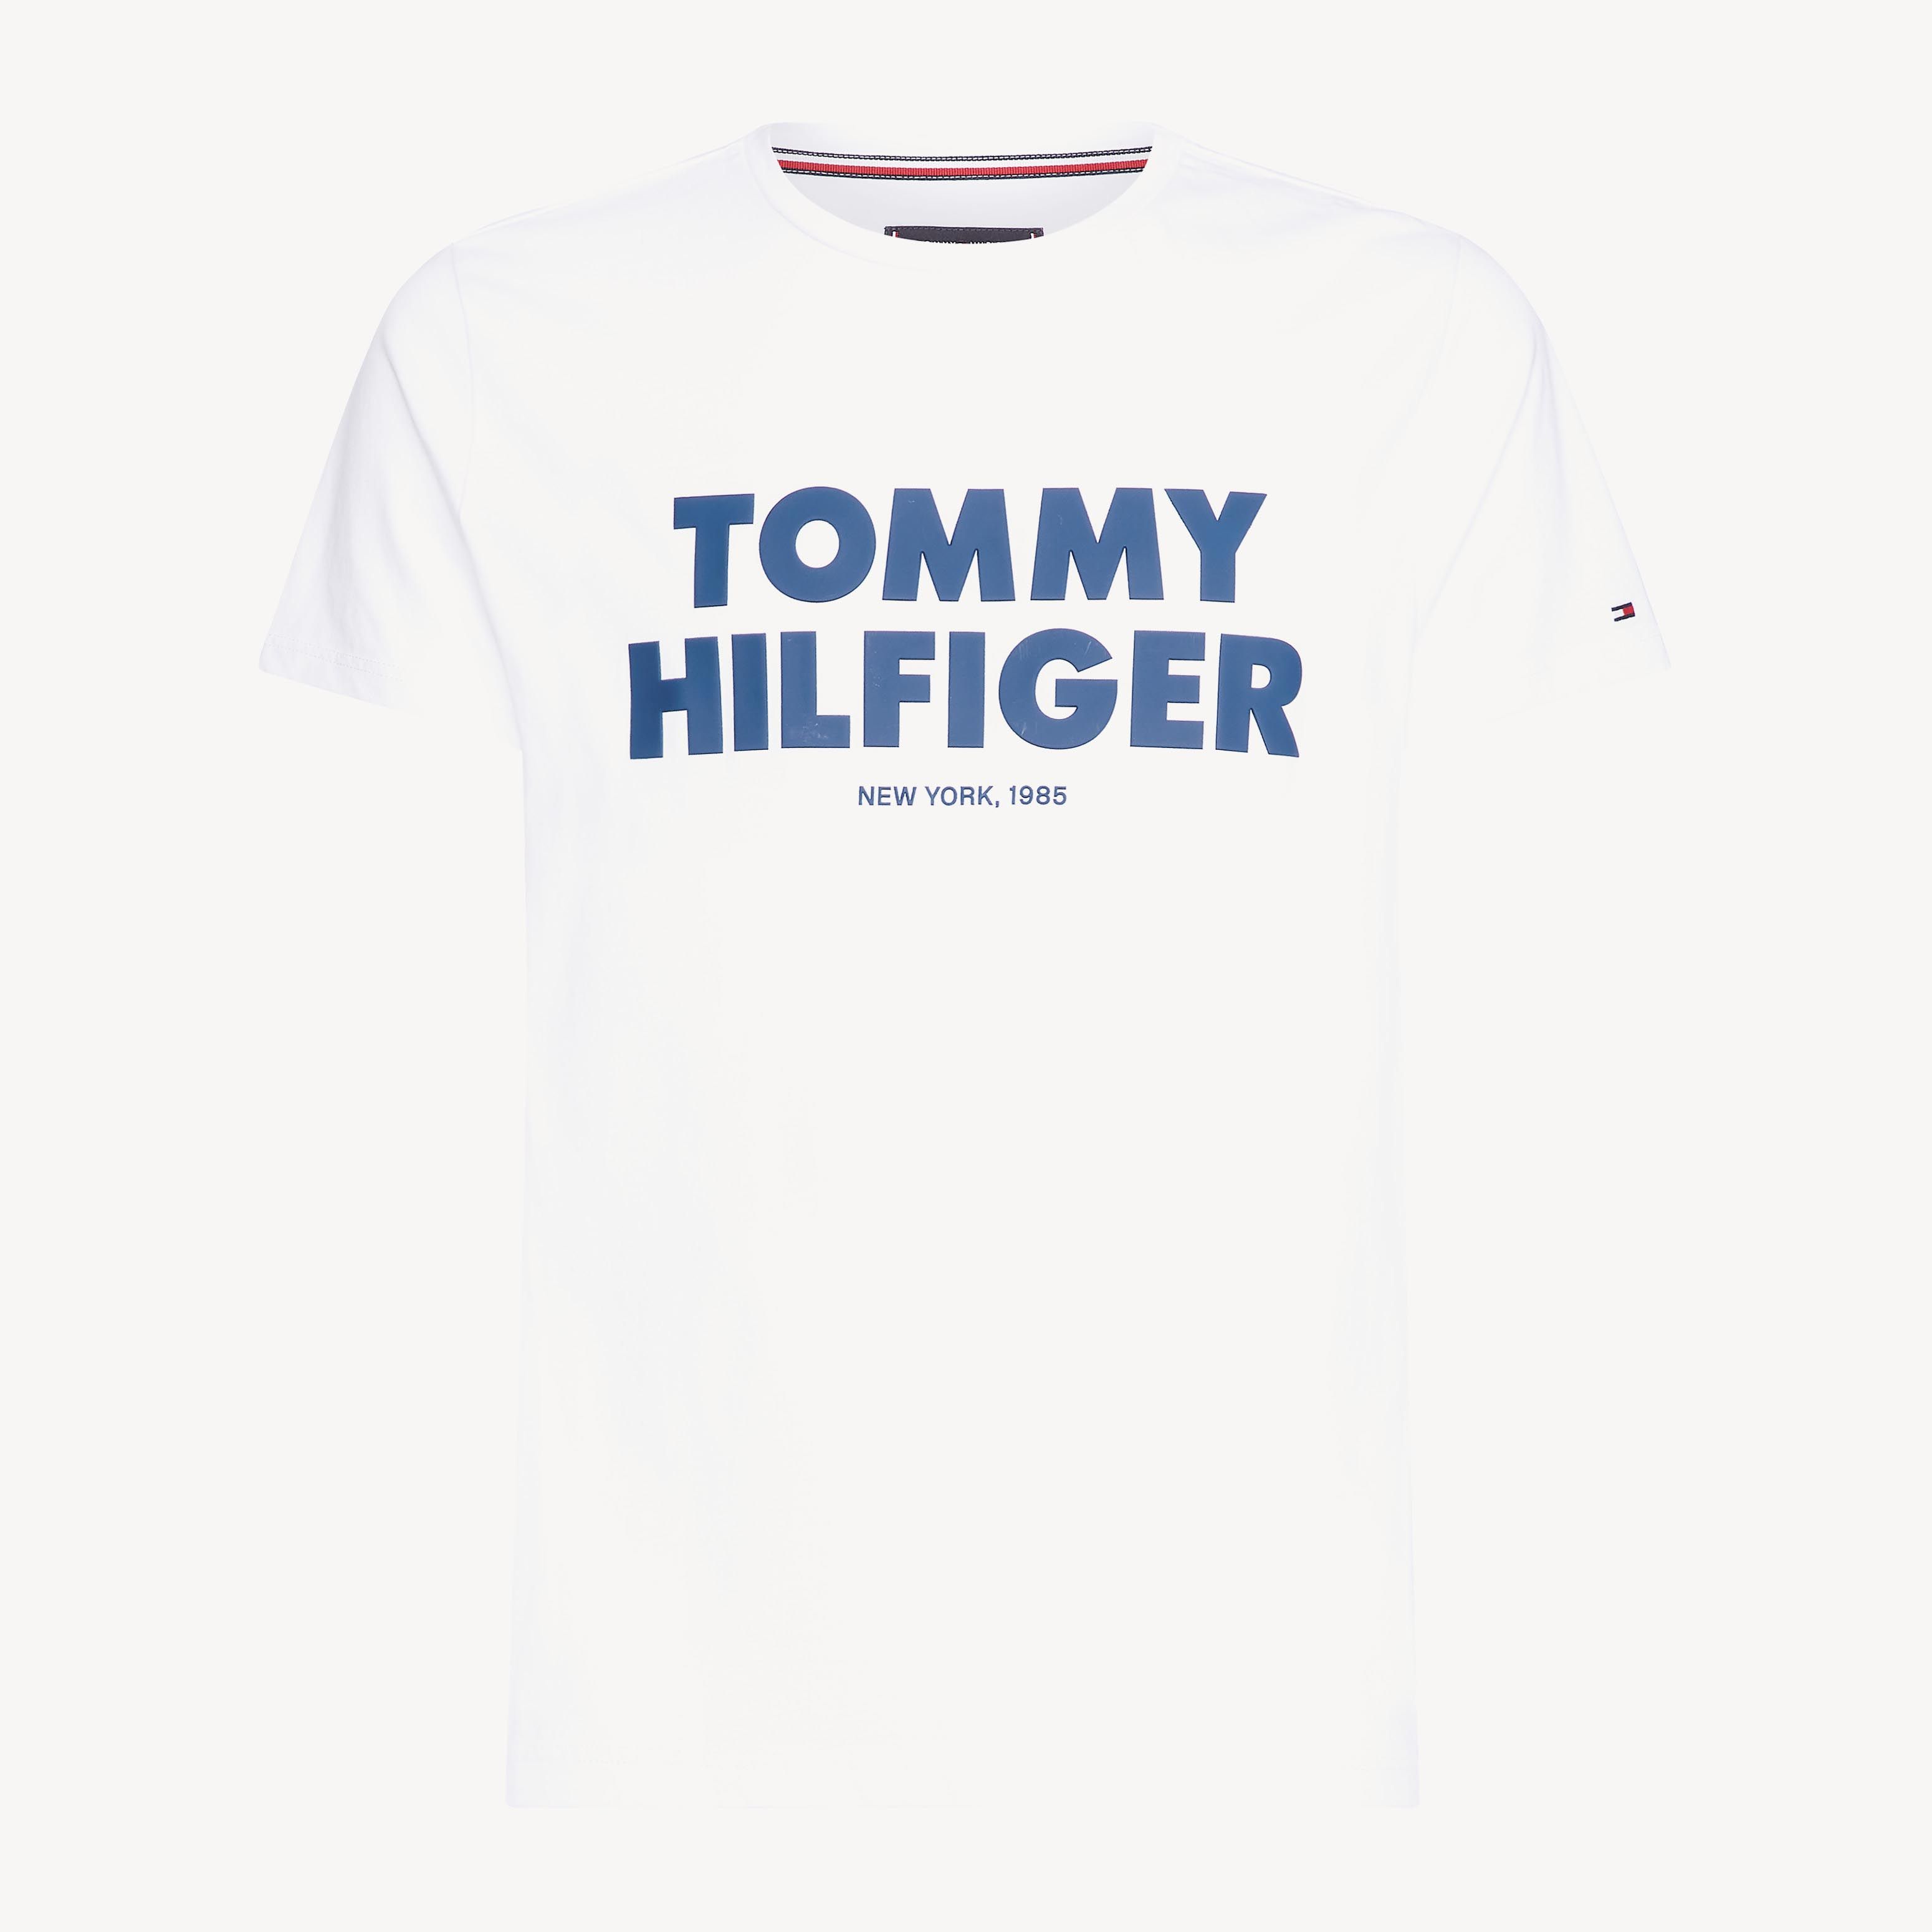 tommy hilfiger 1985 t shirt